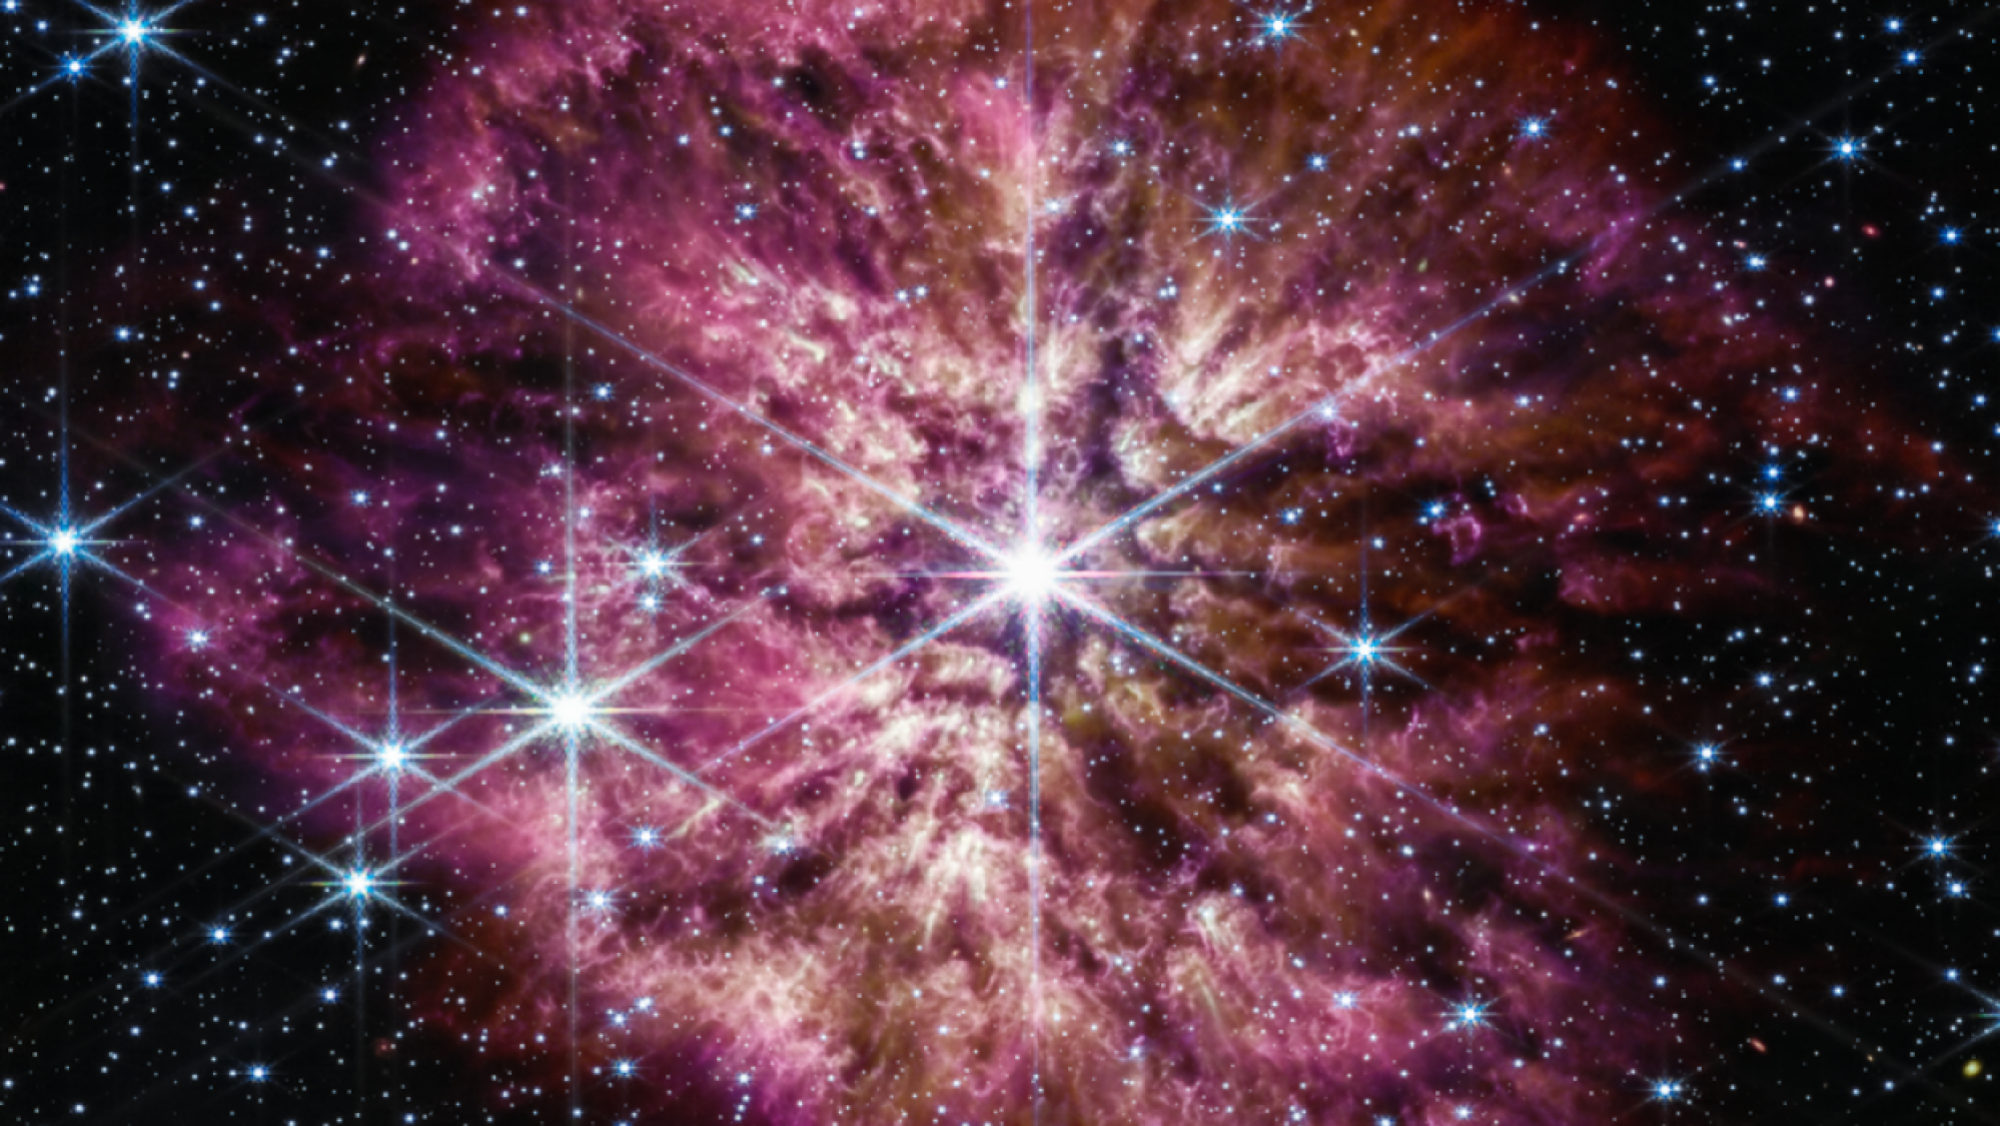 Webb observing a Wolf-Rayet star